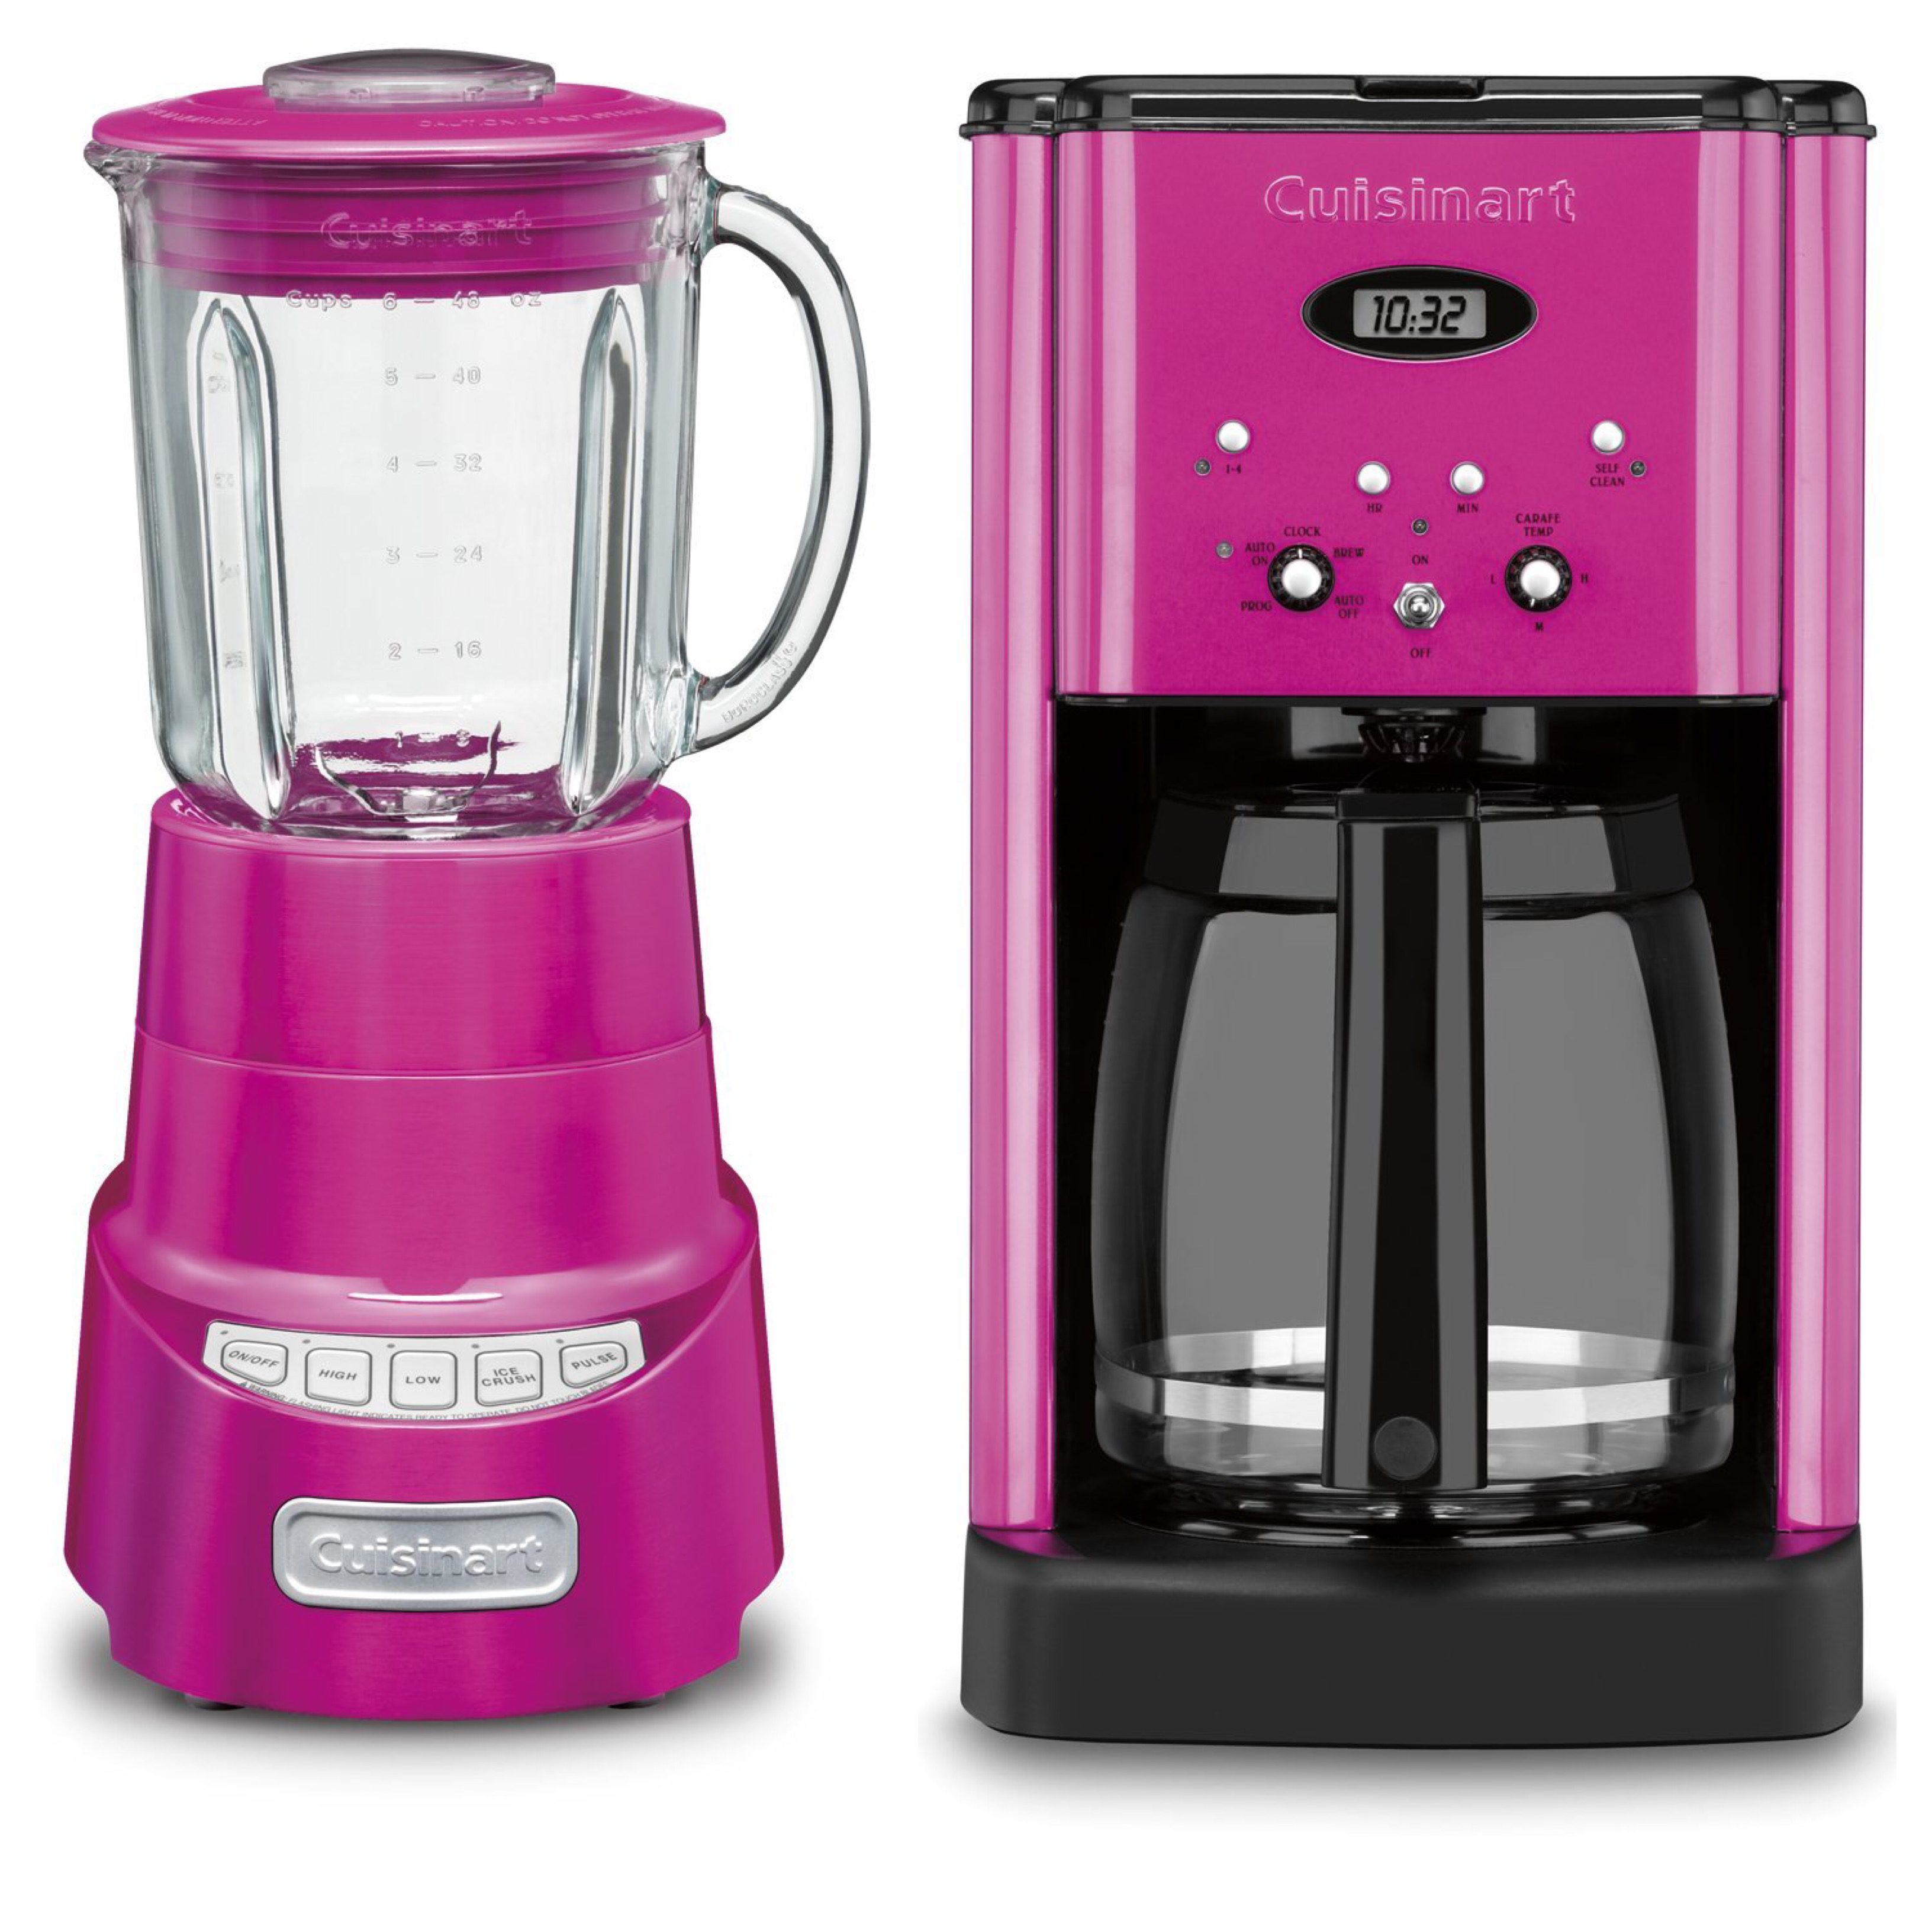 Hot Pink Cuisinart Appliances - Organic Bunny